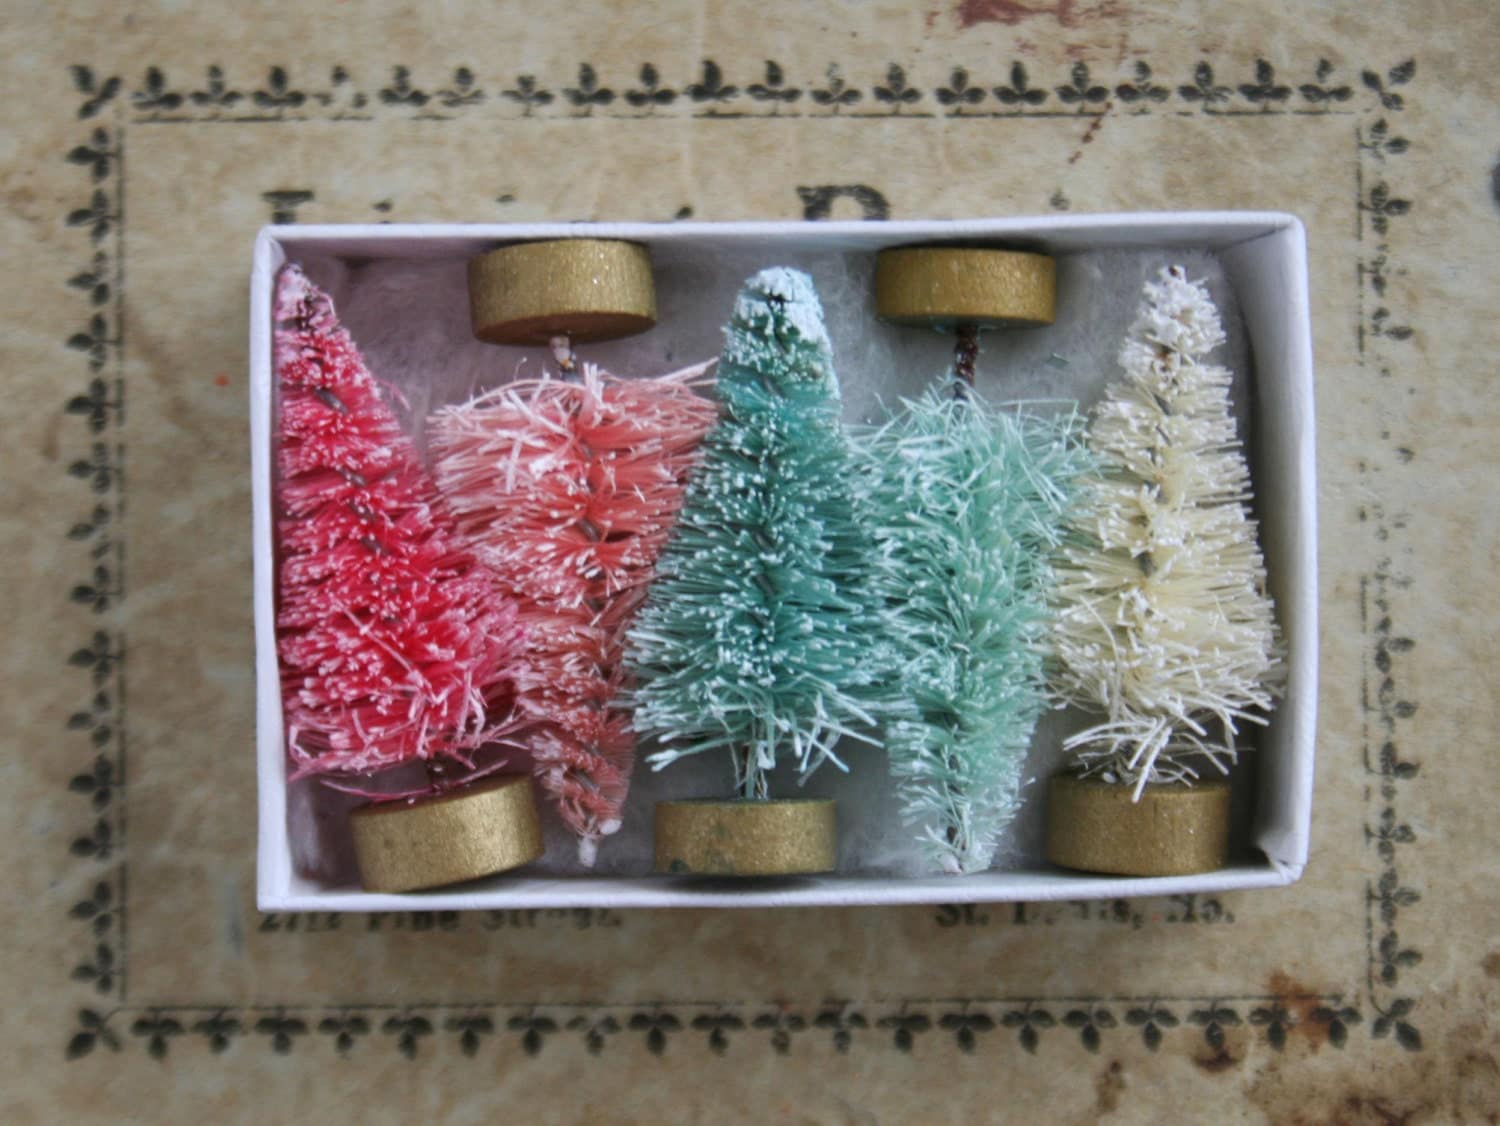 Mini Pastel Bottle Brush Tree Decorations - Pastel Pink and Aqua Miniature 1 1/2 Inch Trees - Tiny Holiday Bottle Brush Tree Gift Box